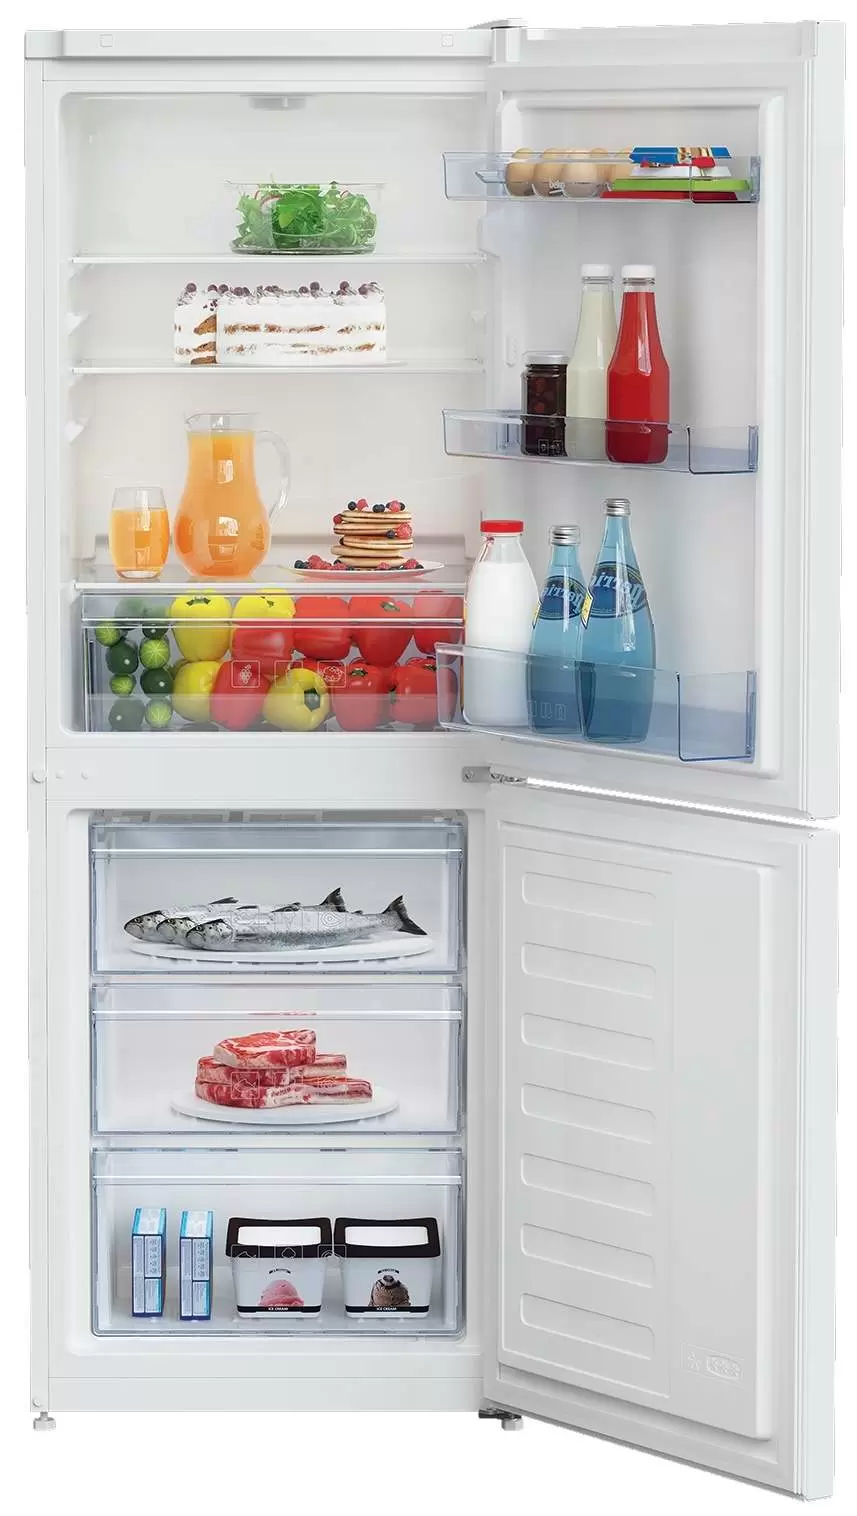 Холодильник Beko RCSA240K30WN, белый